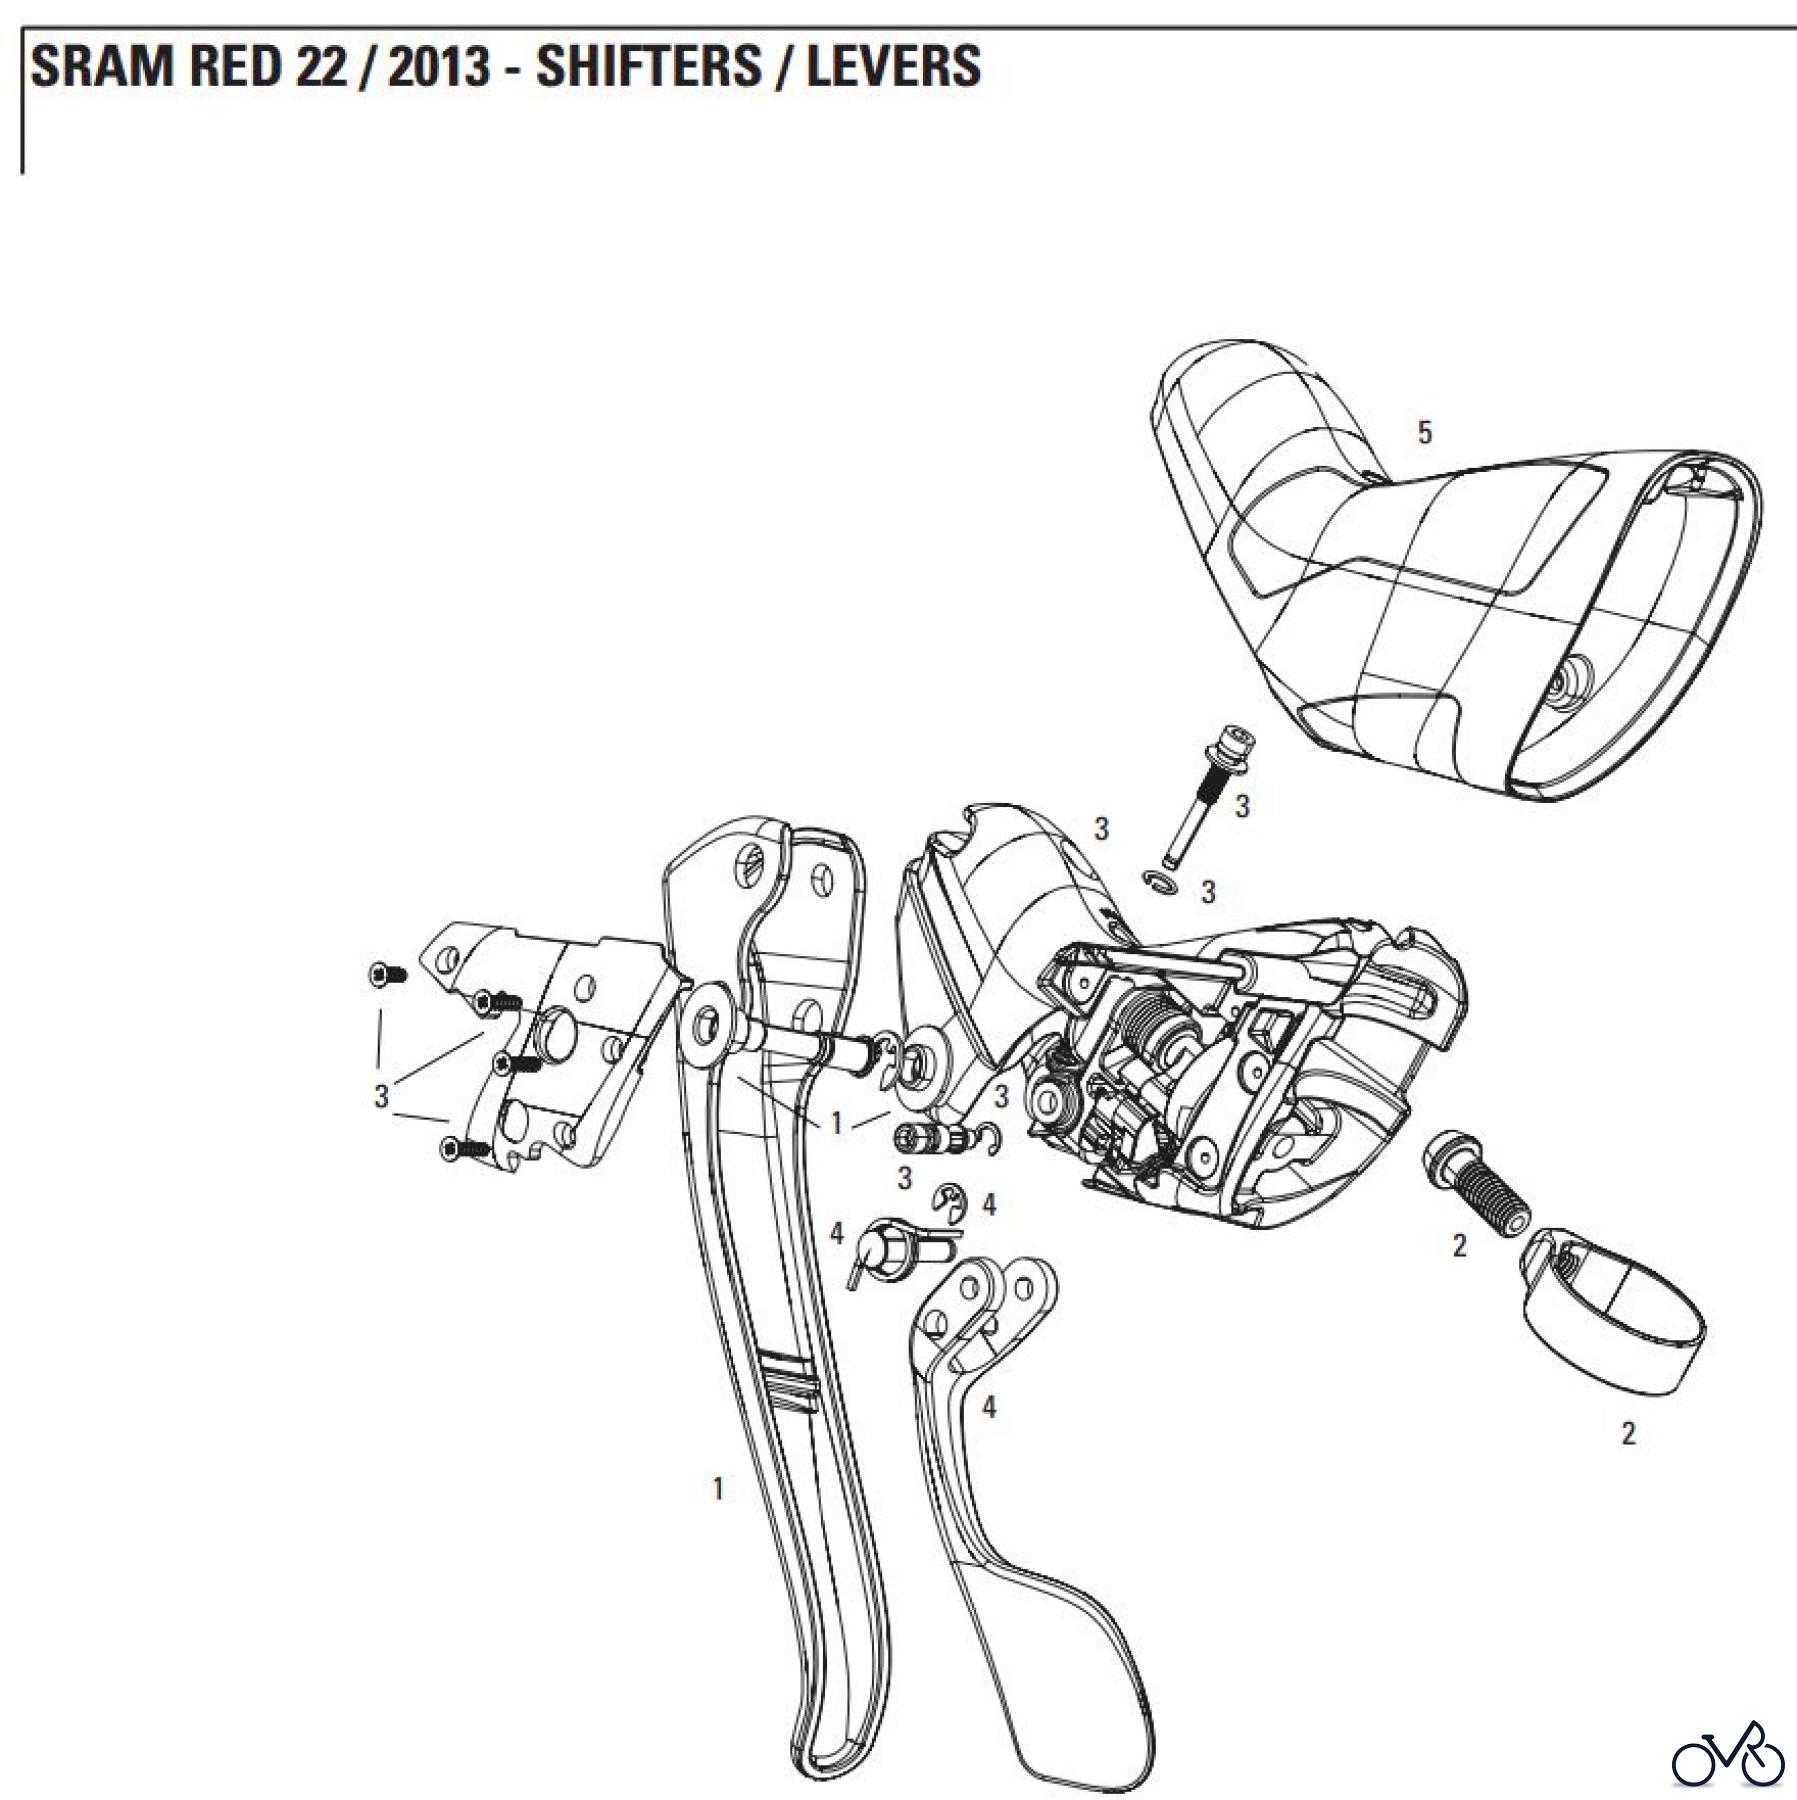  Sram Sram SRAM RED 22 / 2013 - SHIFTERS / LEVERS